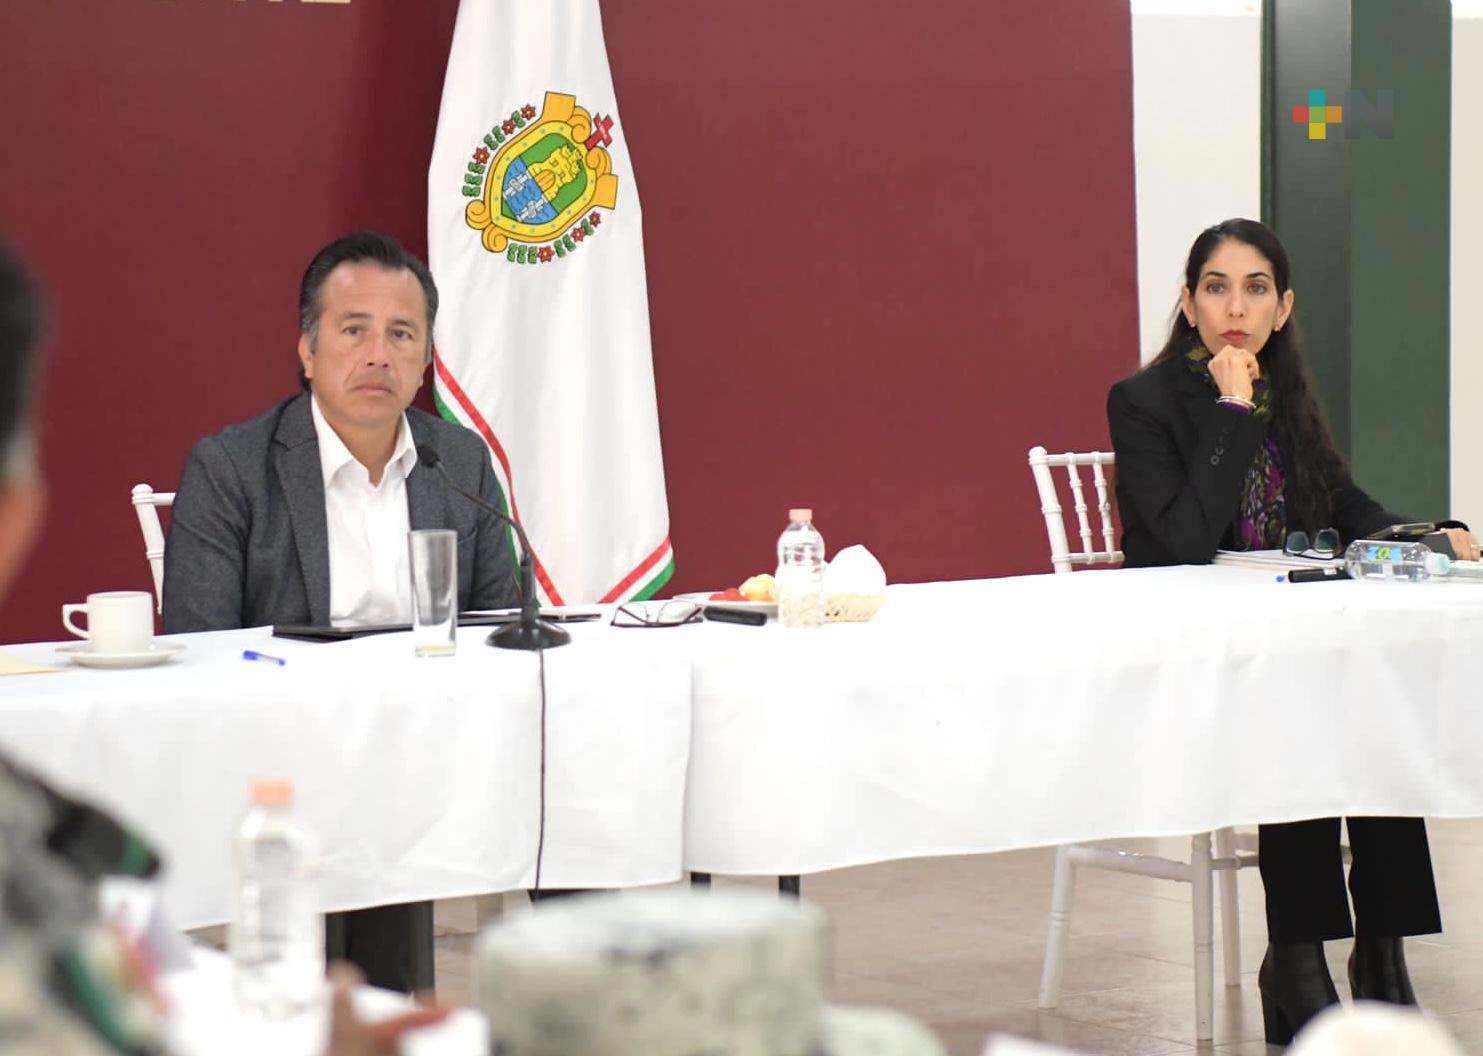 Gobernador Cuitláhuac García encabezó la Mesa de Coesconpaz en Emiliano Zapata